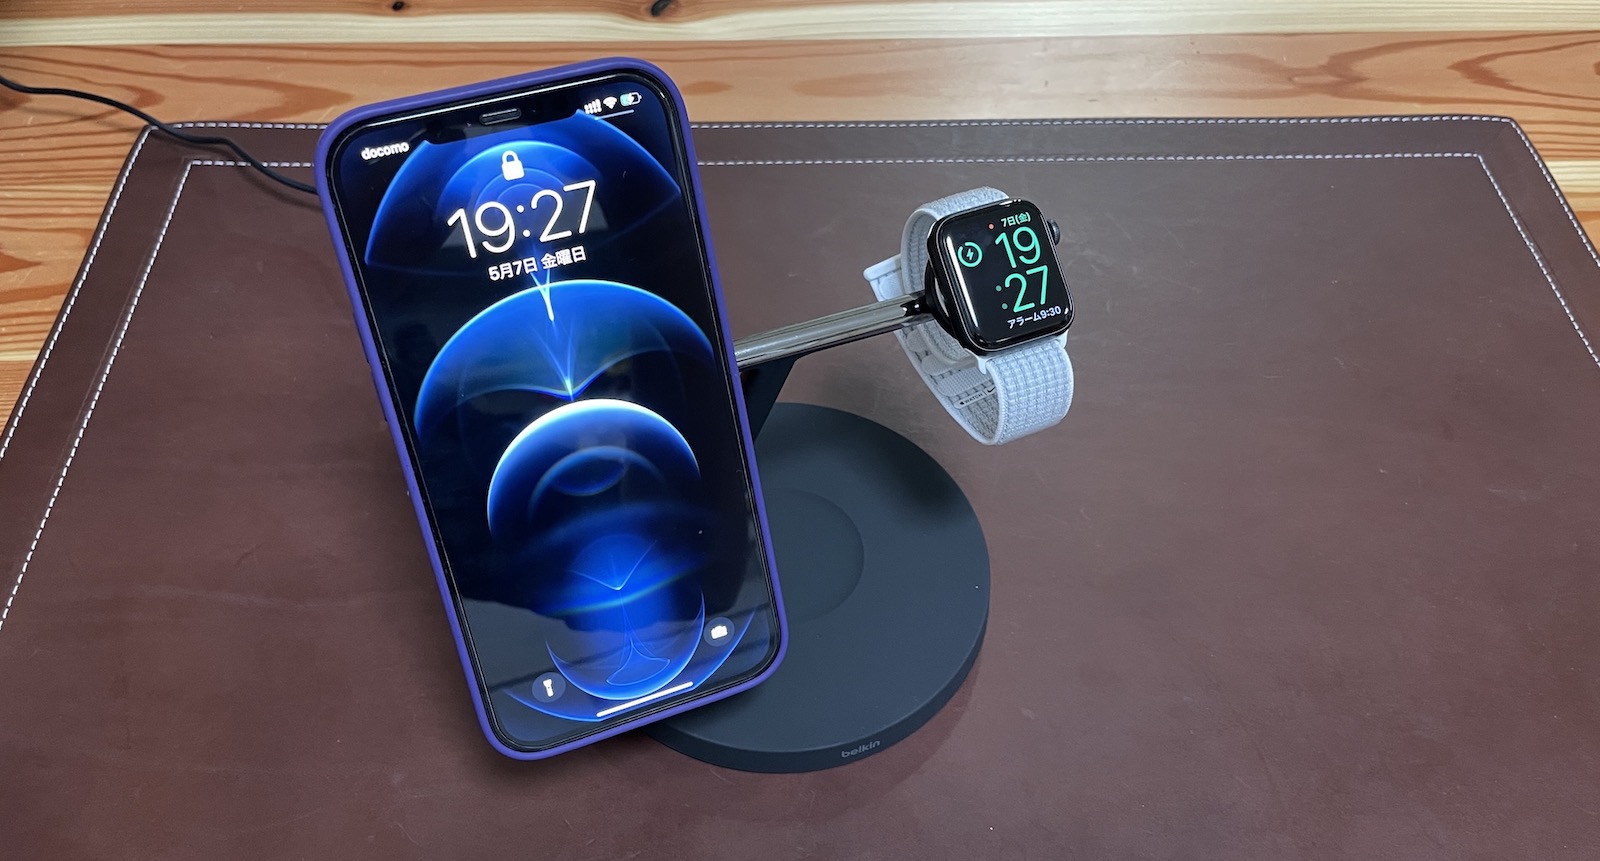 Belkin ワイヤレス充電器と充電中のiPhoneとApple Watch